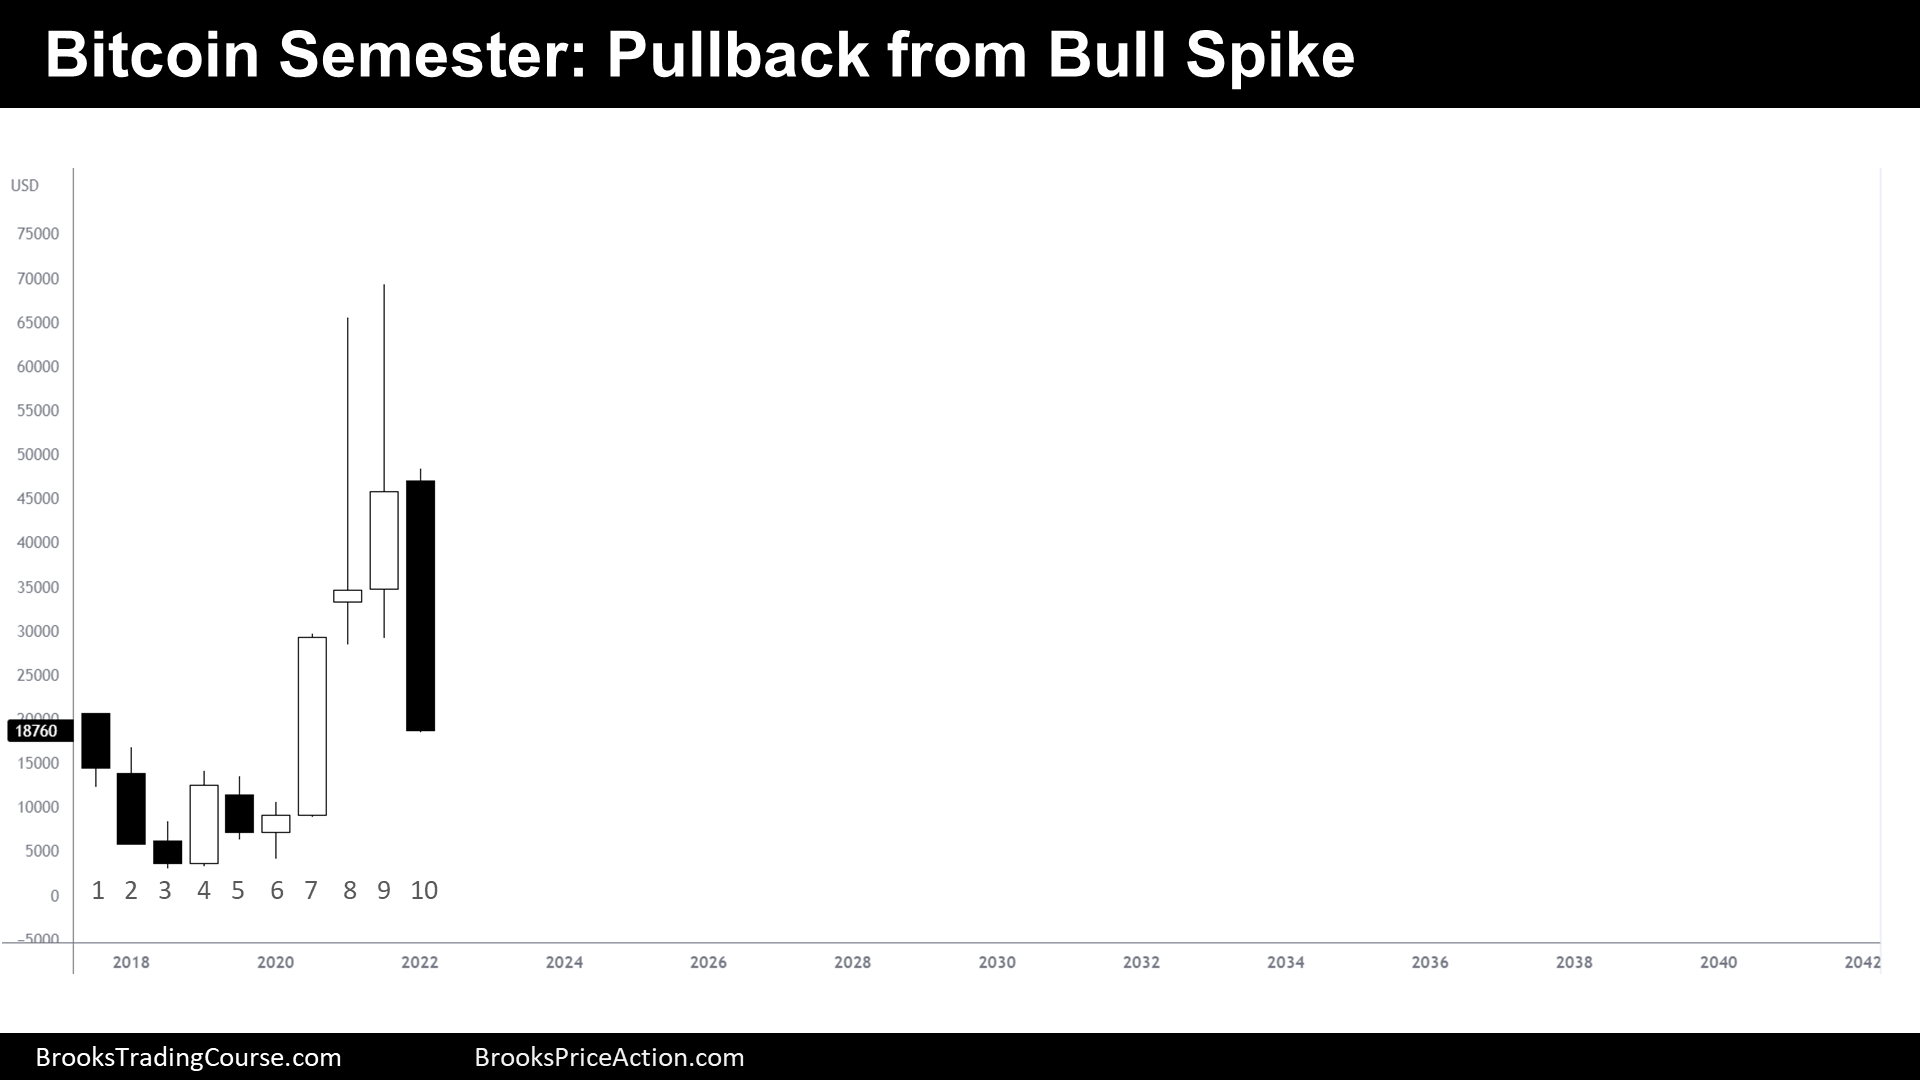 Bitcoin Semester Pullback from Bull Spike